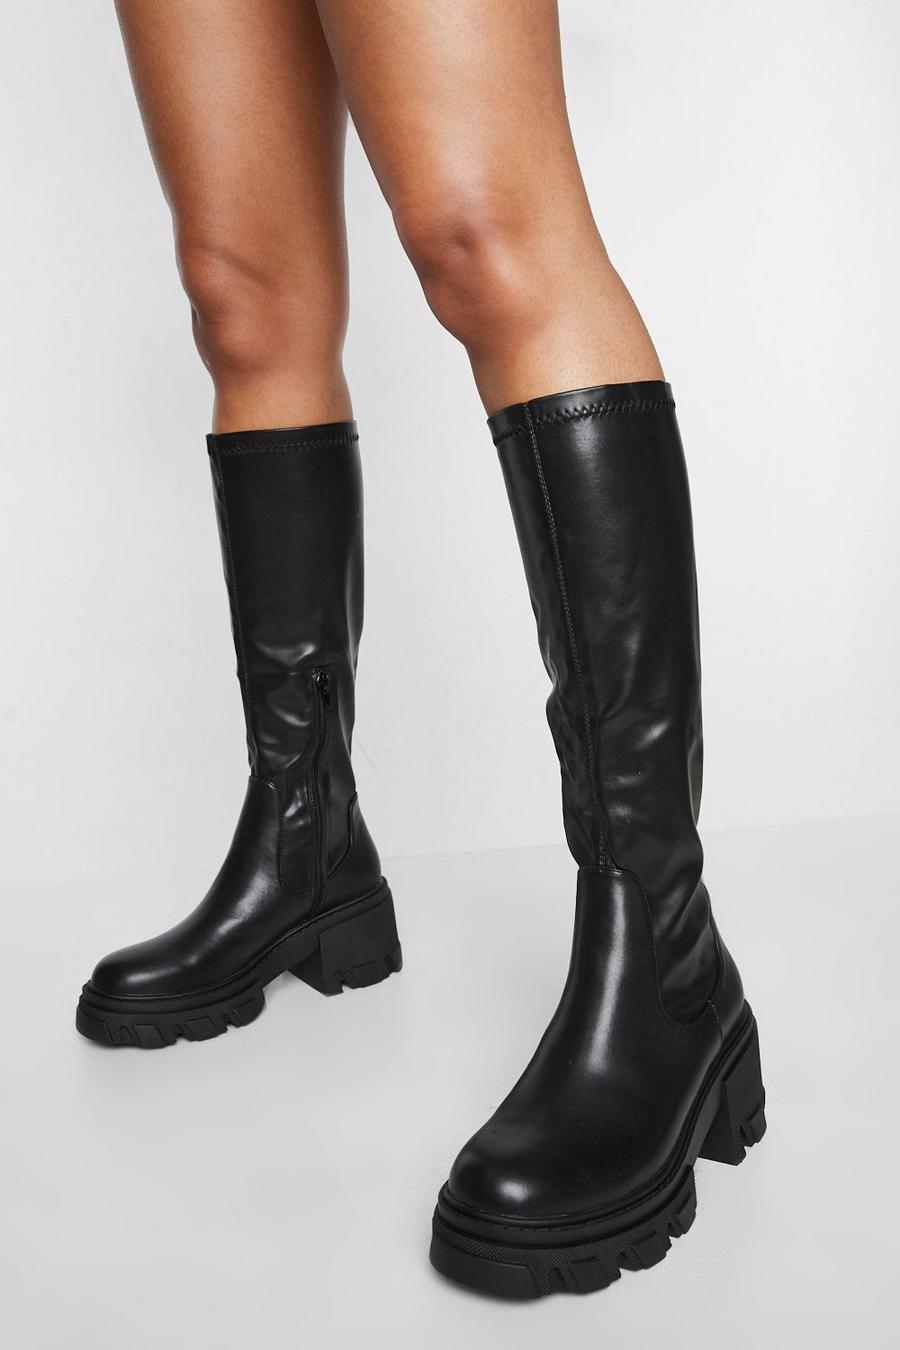 Black schwarz Calf High Chunky Heeled Boots